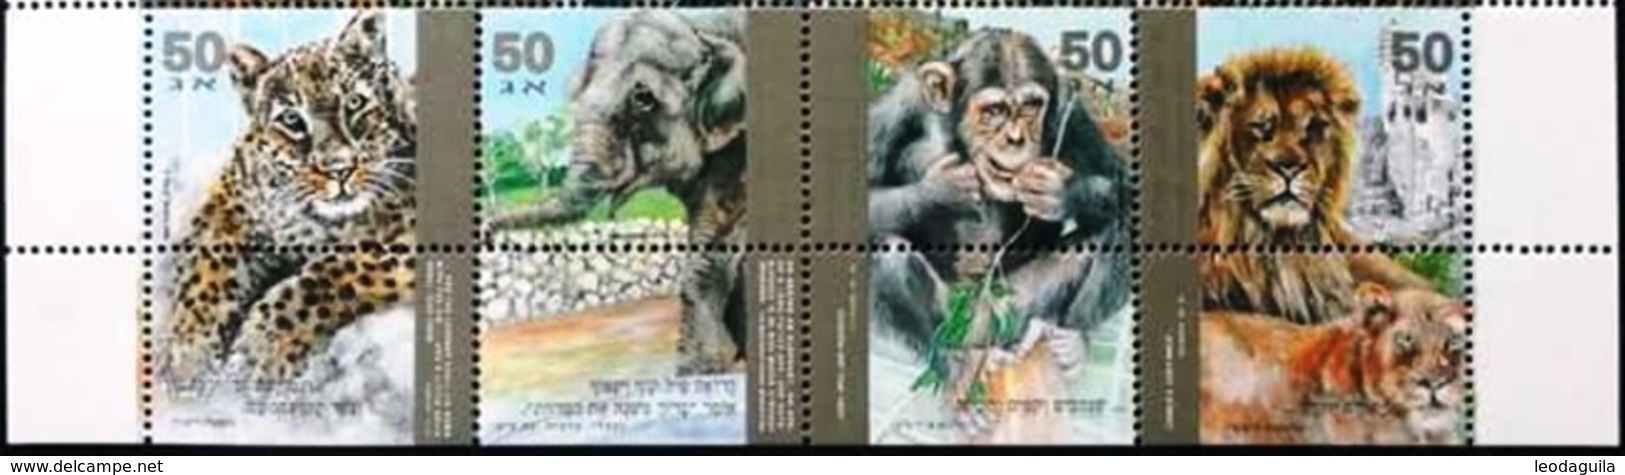 ISRAEL  # 1125-28   WILD ANIMALS  4v  -  JAGUAR - MONKEY -1992 - Unused Stamps (with Tabs)